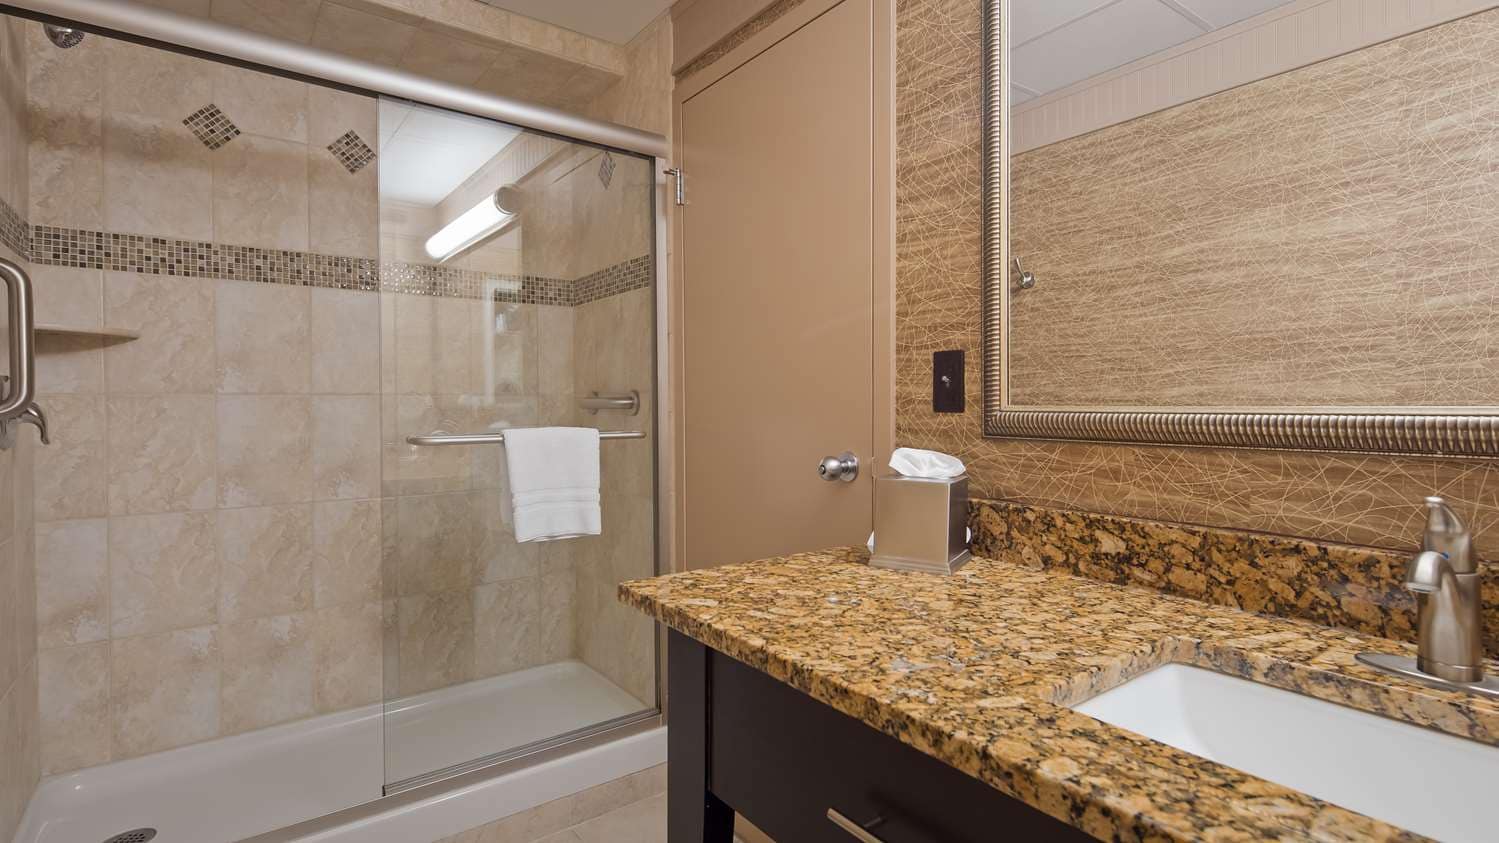 Orient Express bathroom - Contemporary - Bathroom - Philadelphia